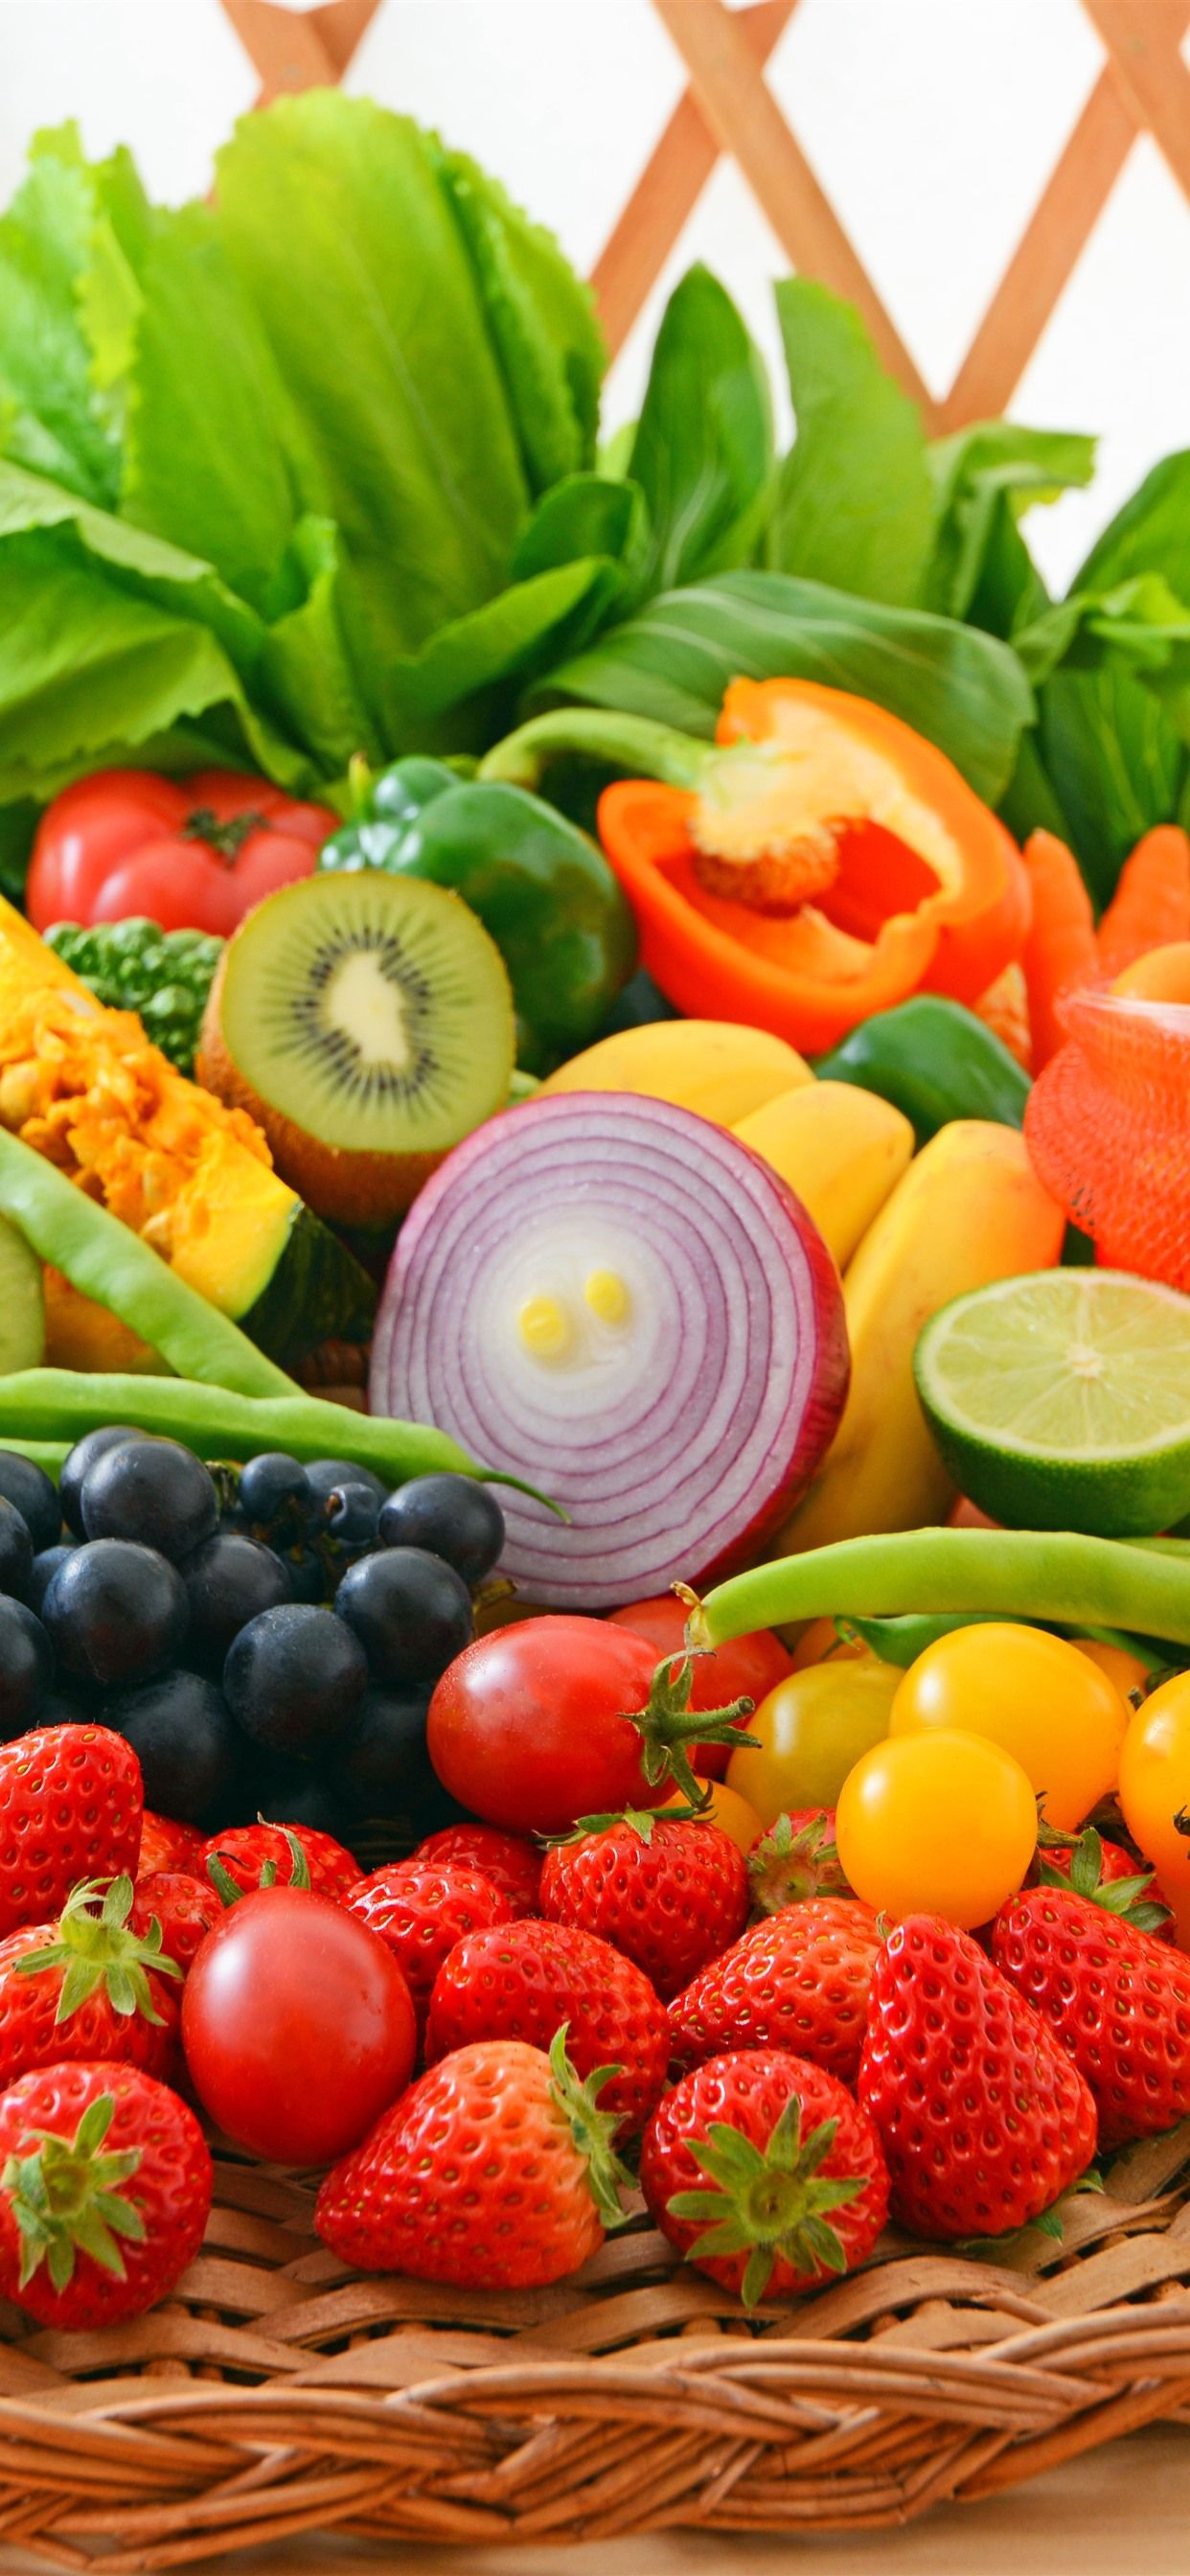 Fruit and vegetables, strawberry, grapes, kiwi, banana, onion